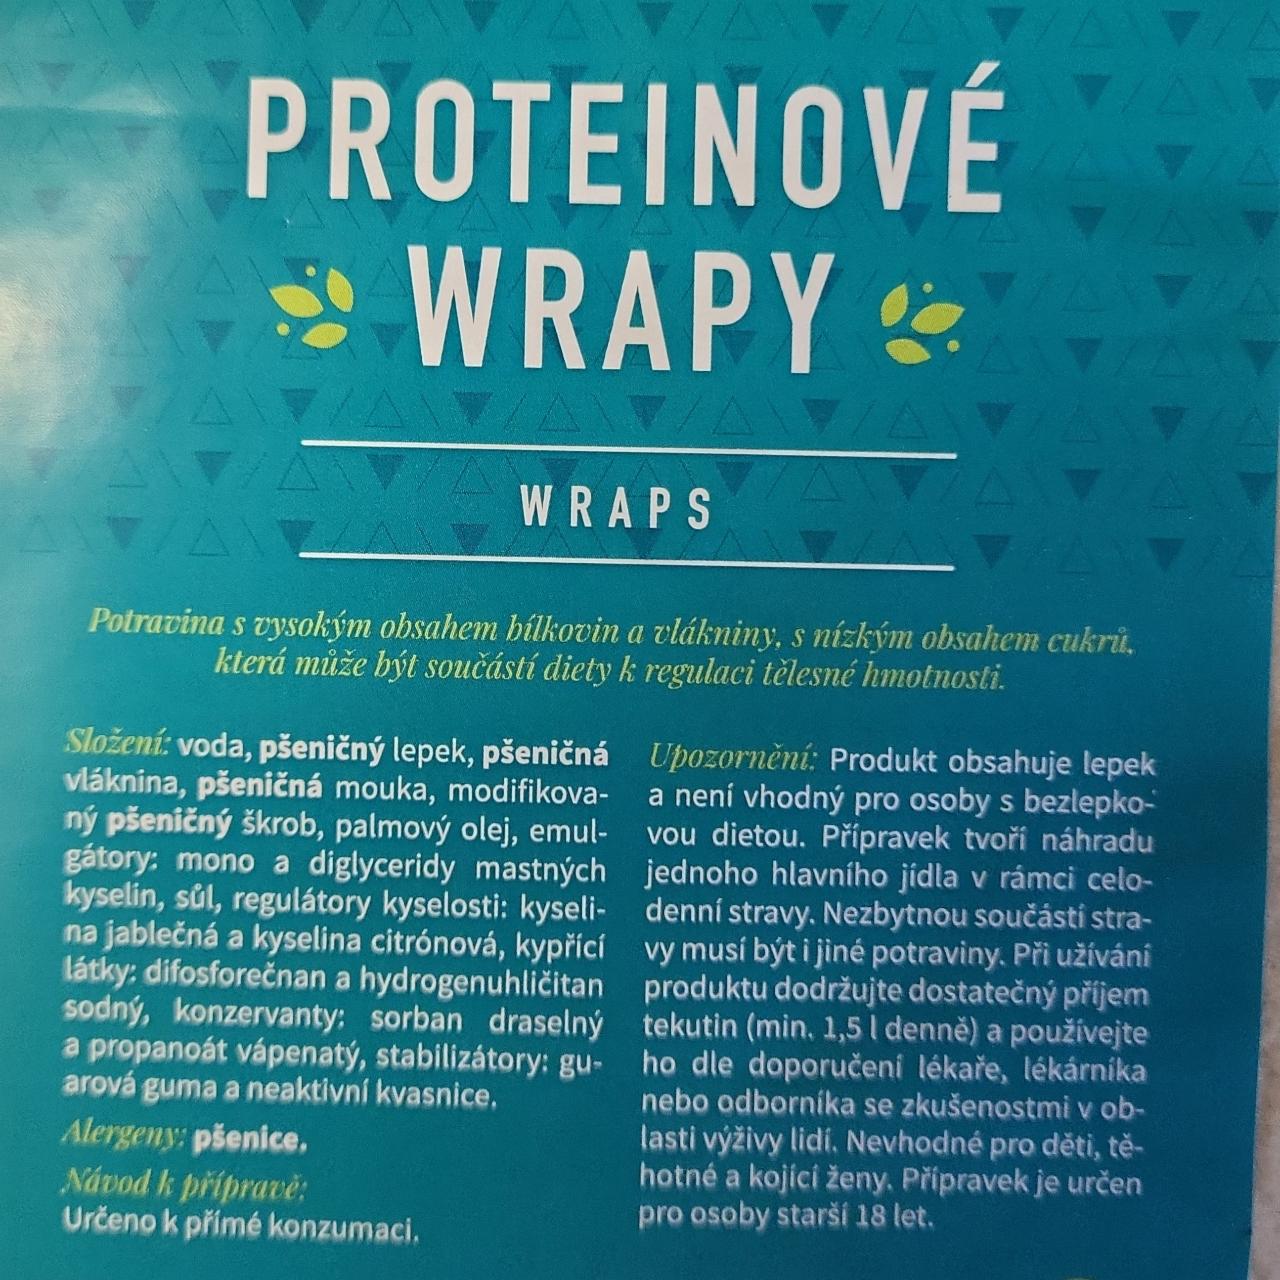 Fotografie - Proteinové wrapy